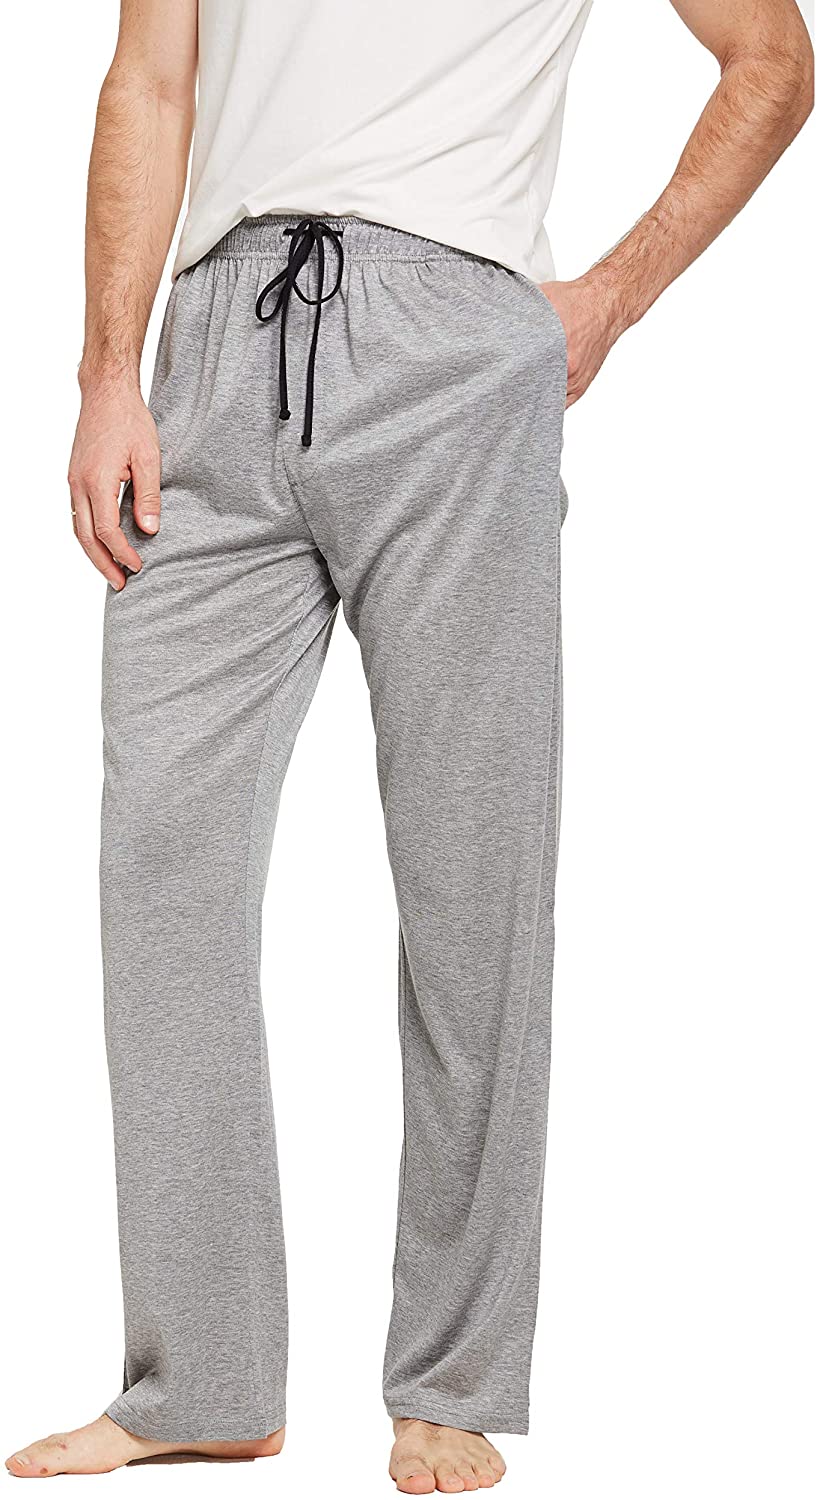 CYZ Comfortable Jersey Cotton Knit Pajama Lounge Sleep Pants 